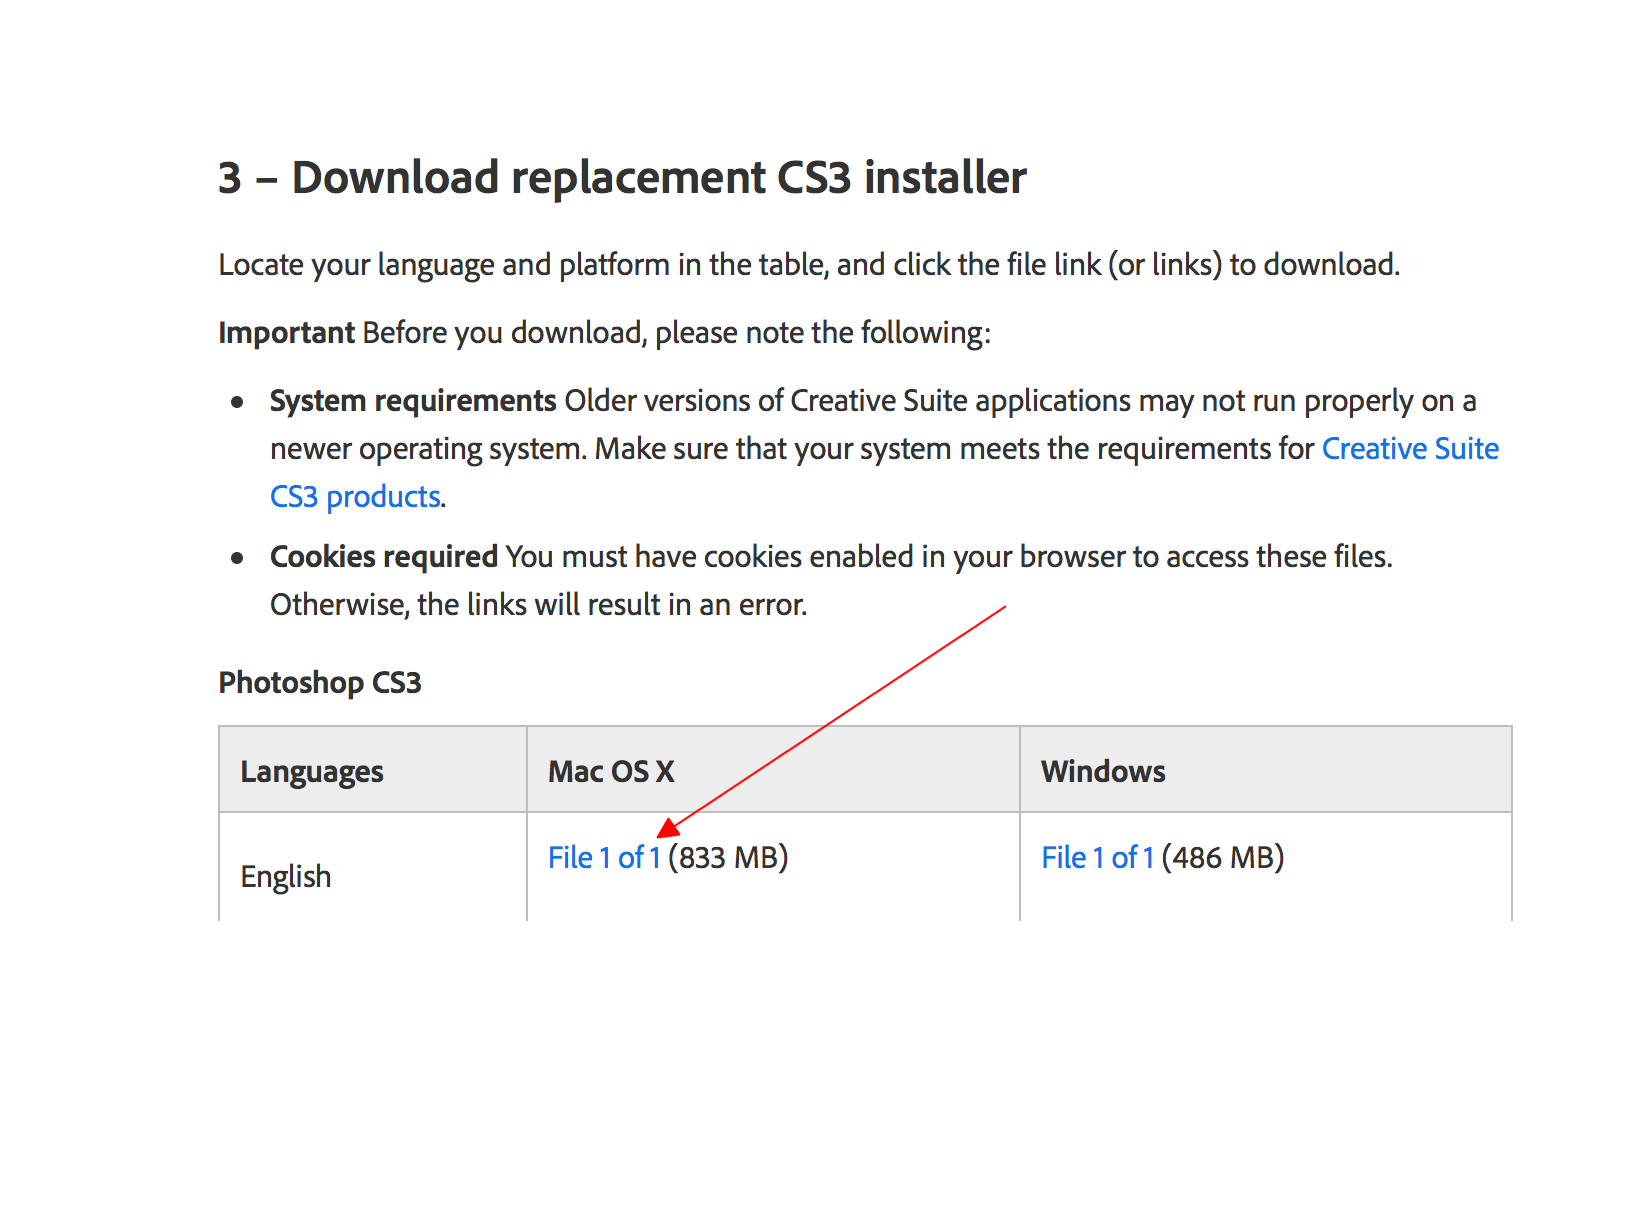 can adobe cs3 run with mac os x version 10.6